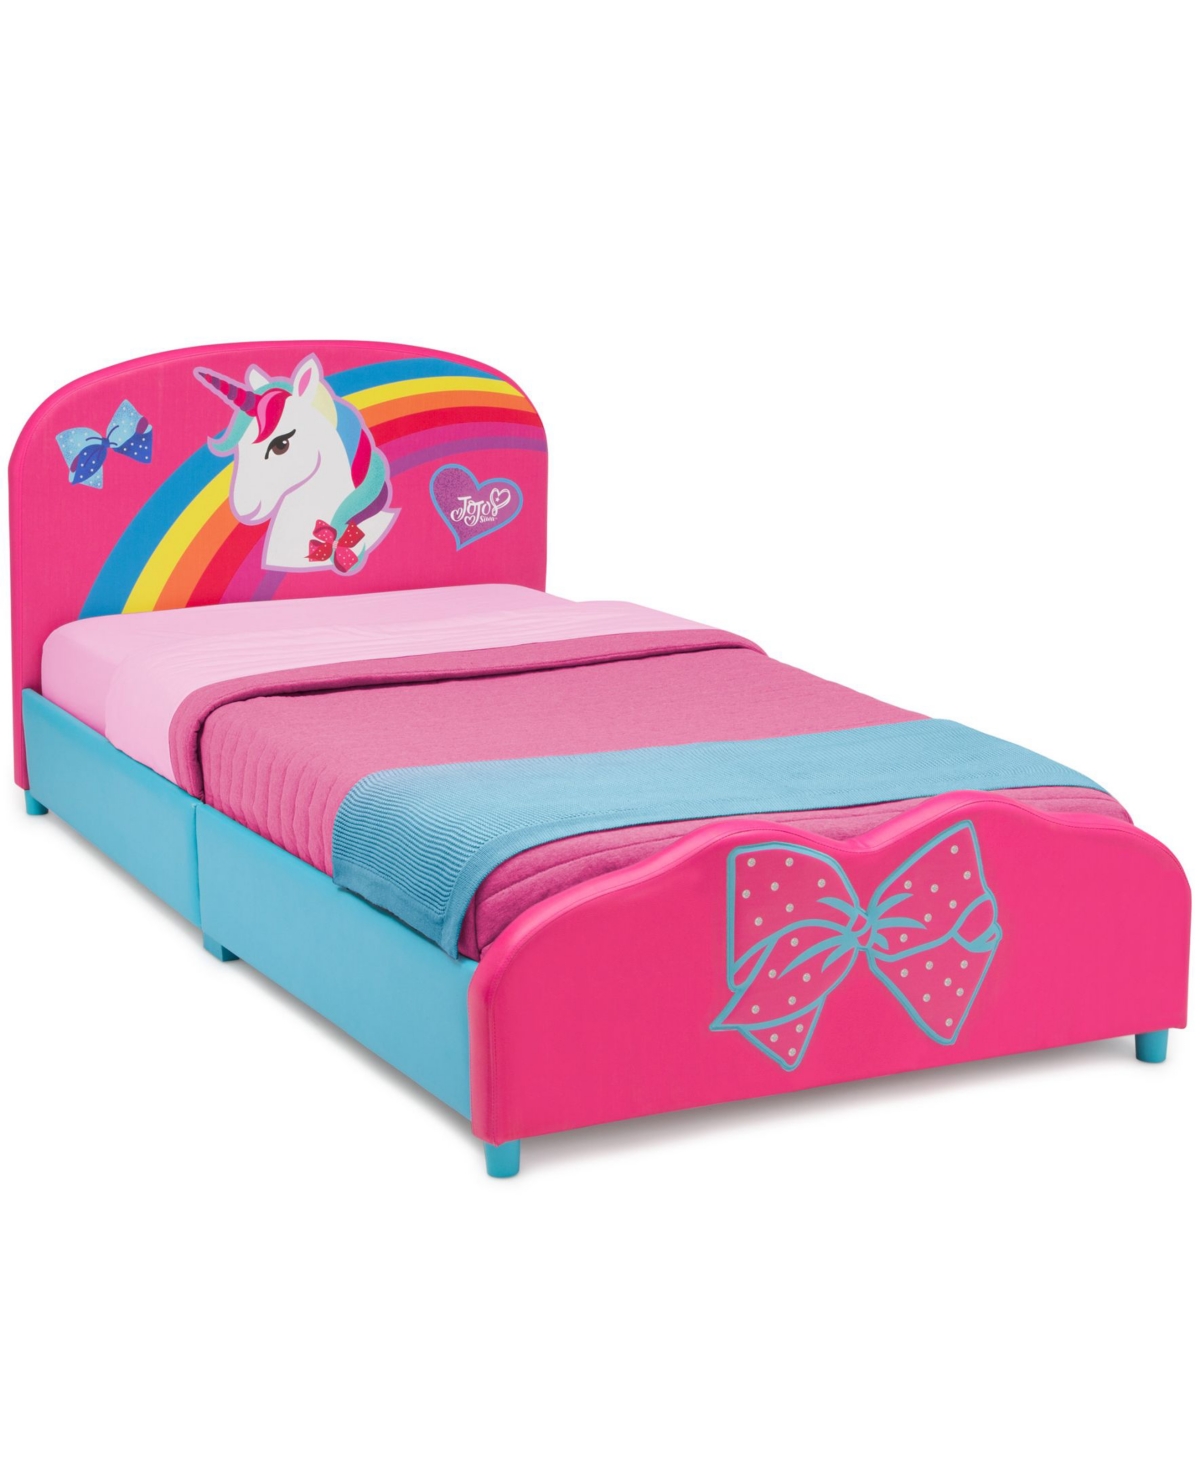 11928728 Jojo Siwa Upholstered Twin Bed by Delta Children sku 11928728